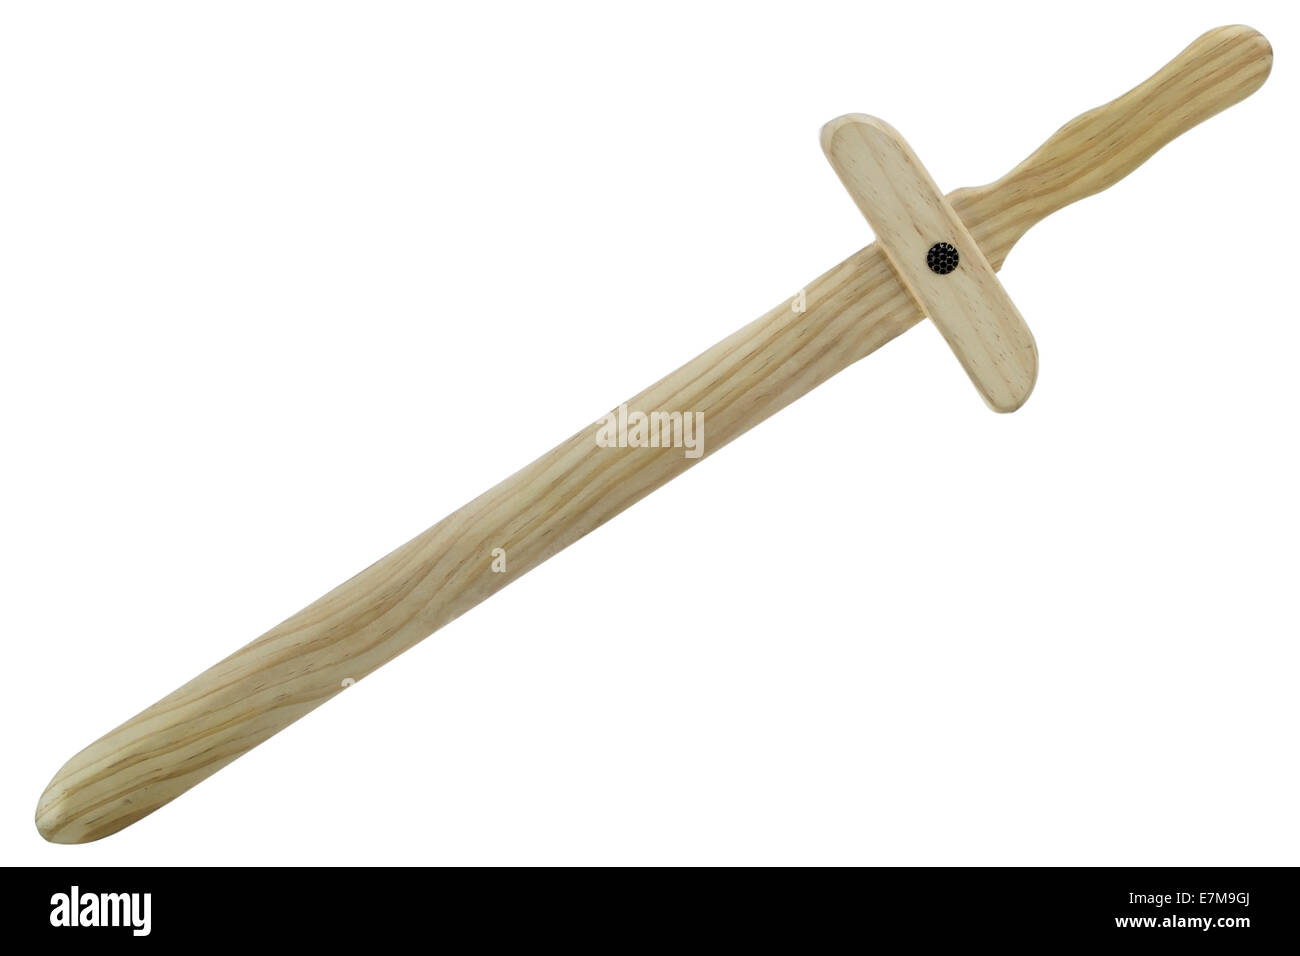 Espada de madera fotografías e imágenes de alta resolución - Alamy